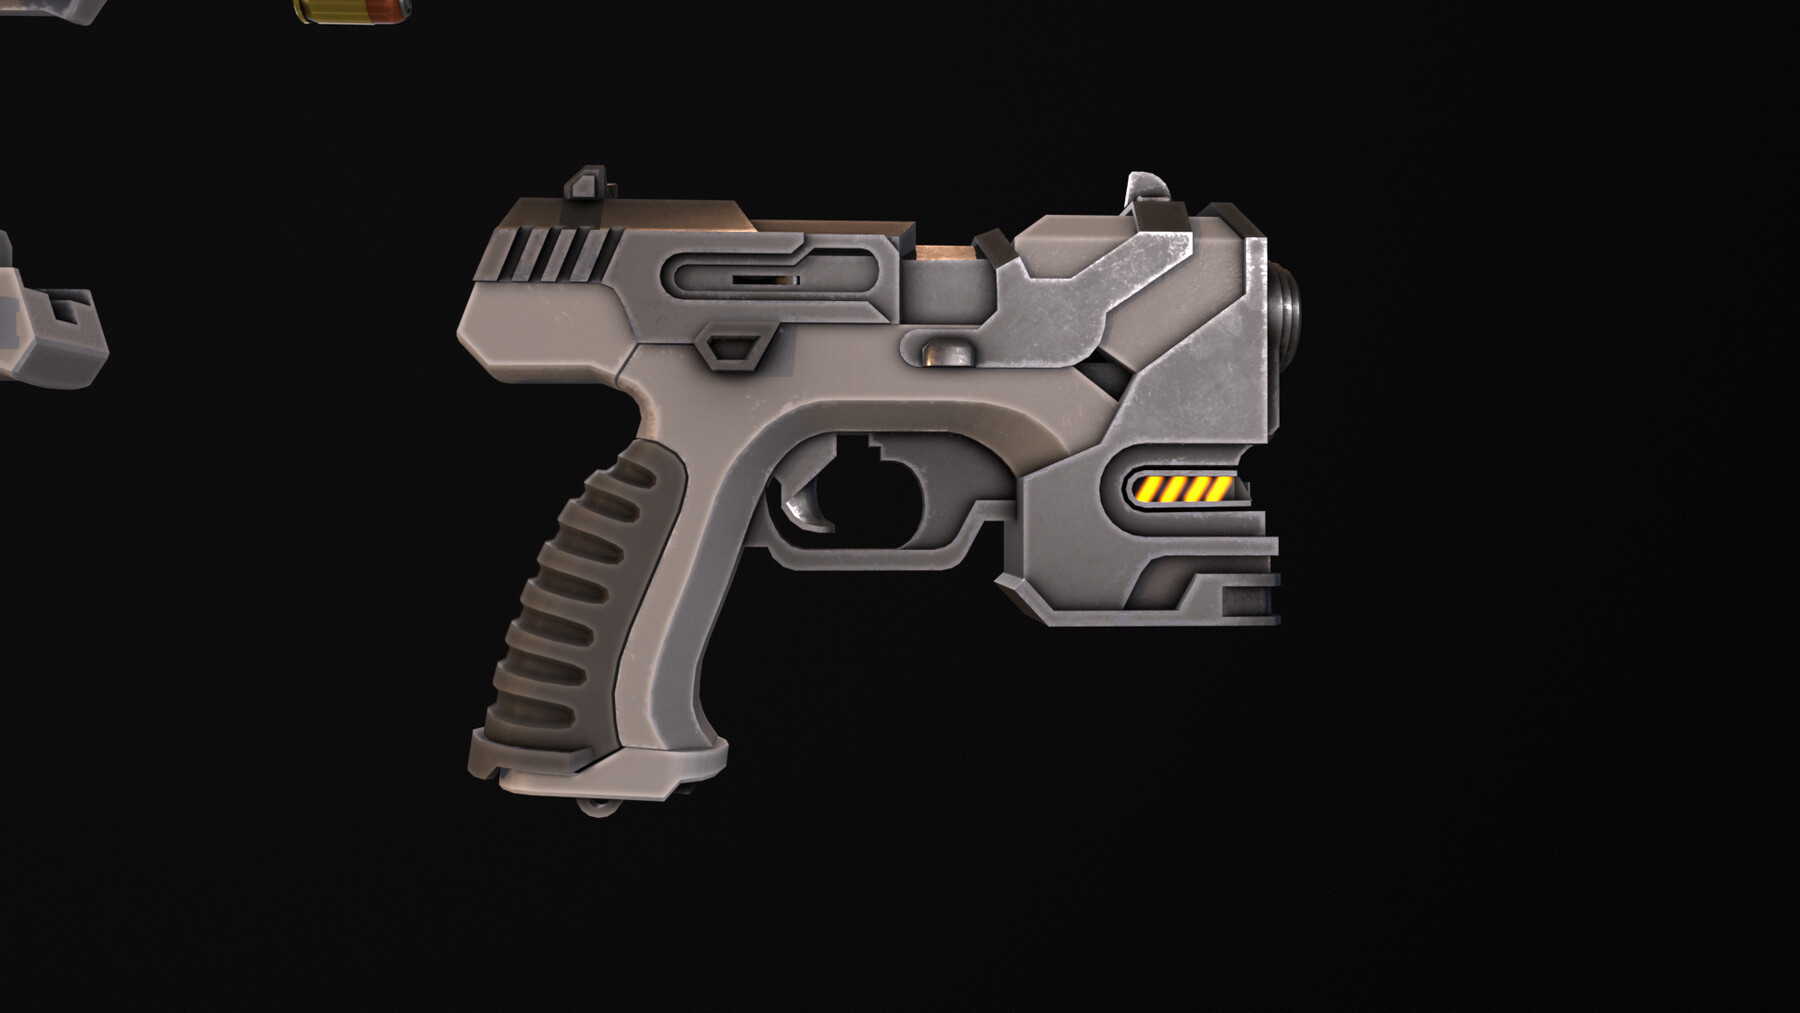 ArtStation - Sci-fi gun and case - Fully modular + Unreal Engine ...